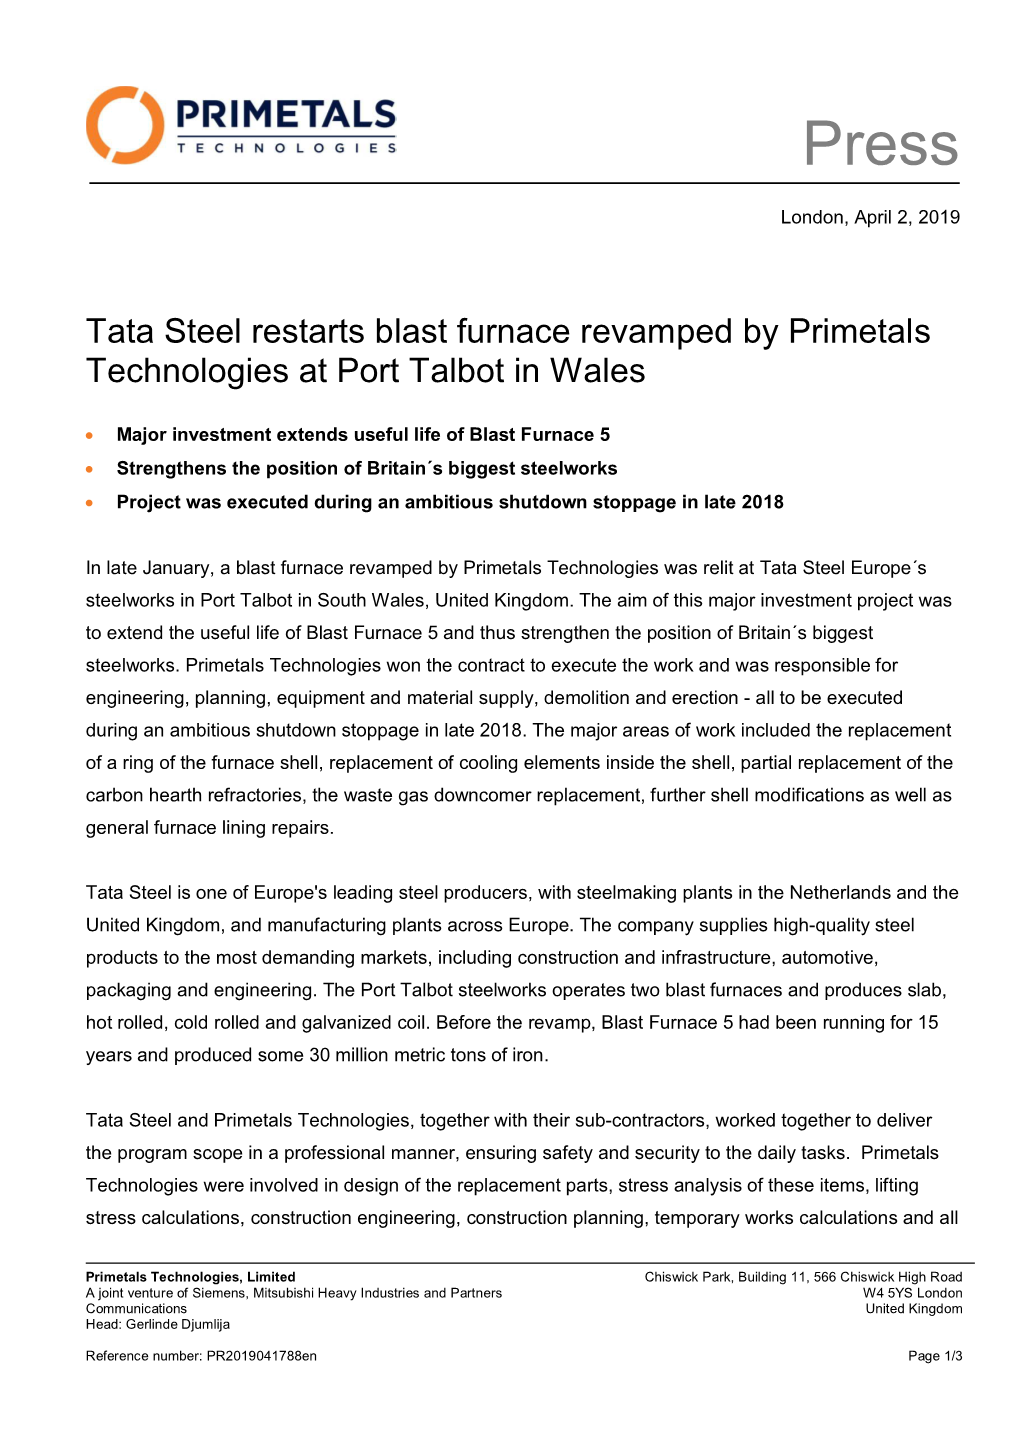 Tata Steel Restarts Blast Furnace Revamped by Primetals Technologies at Port Talbot in Wales